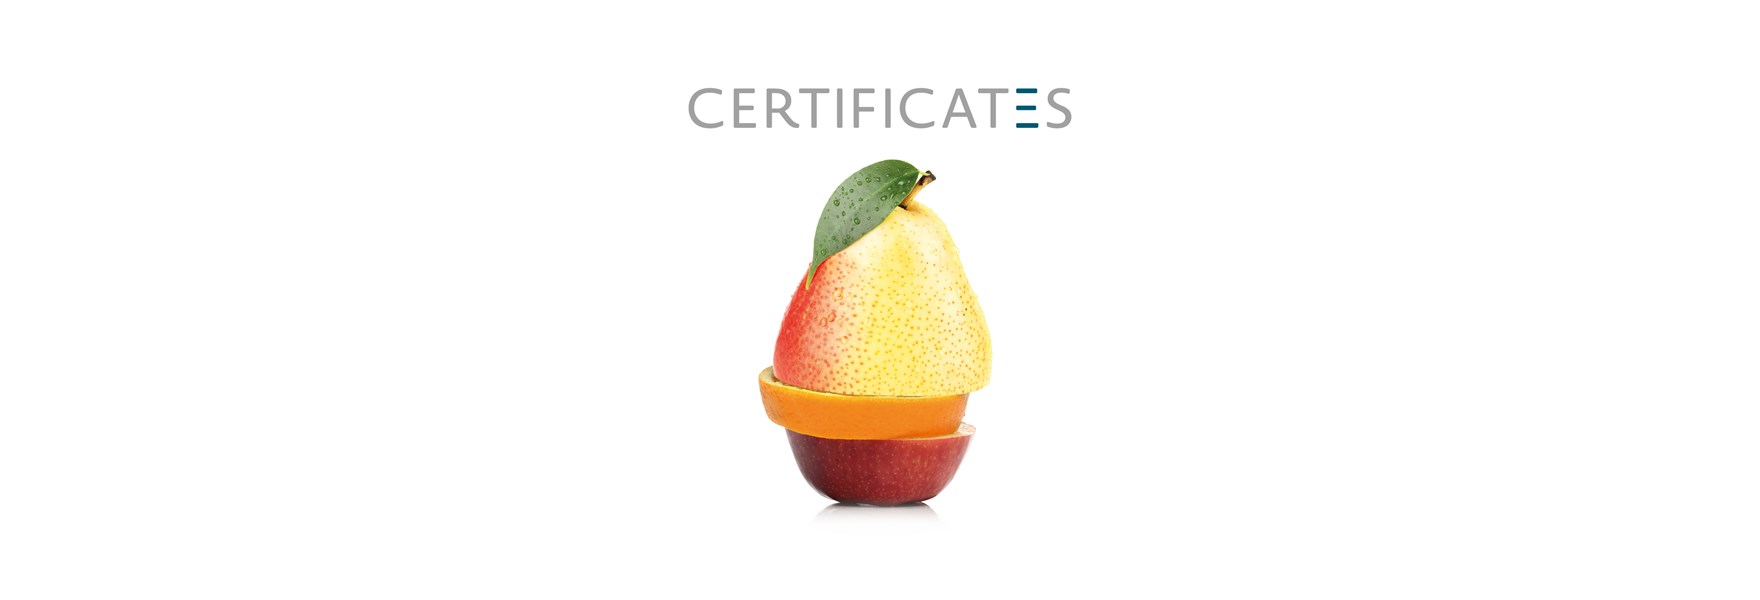 certificates.jpg 